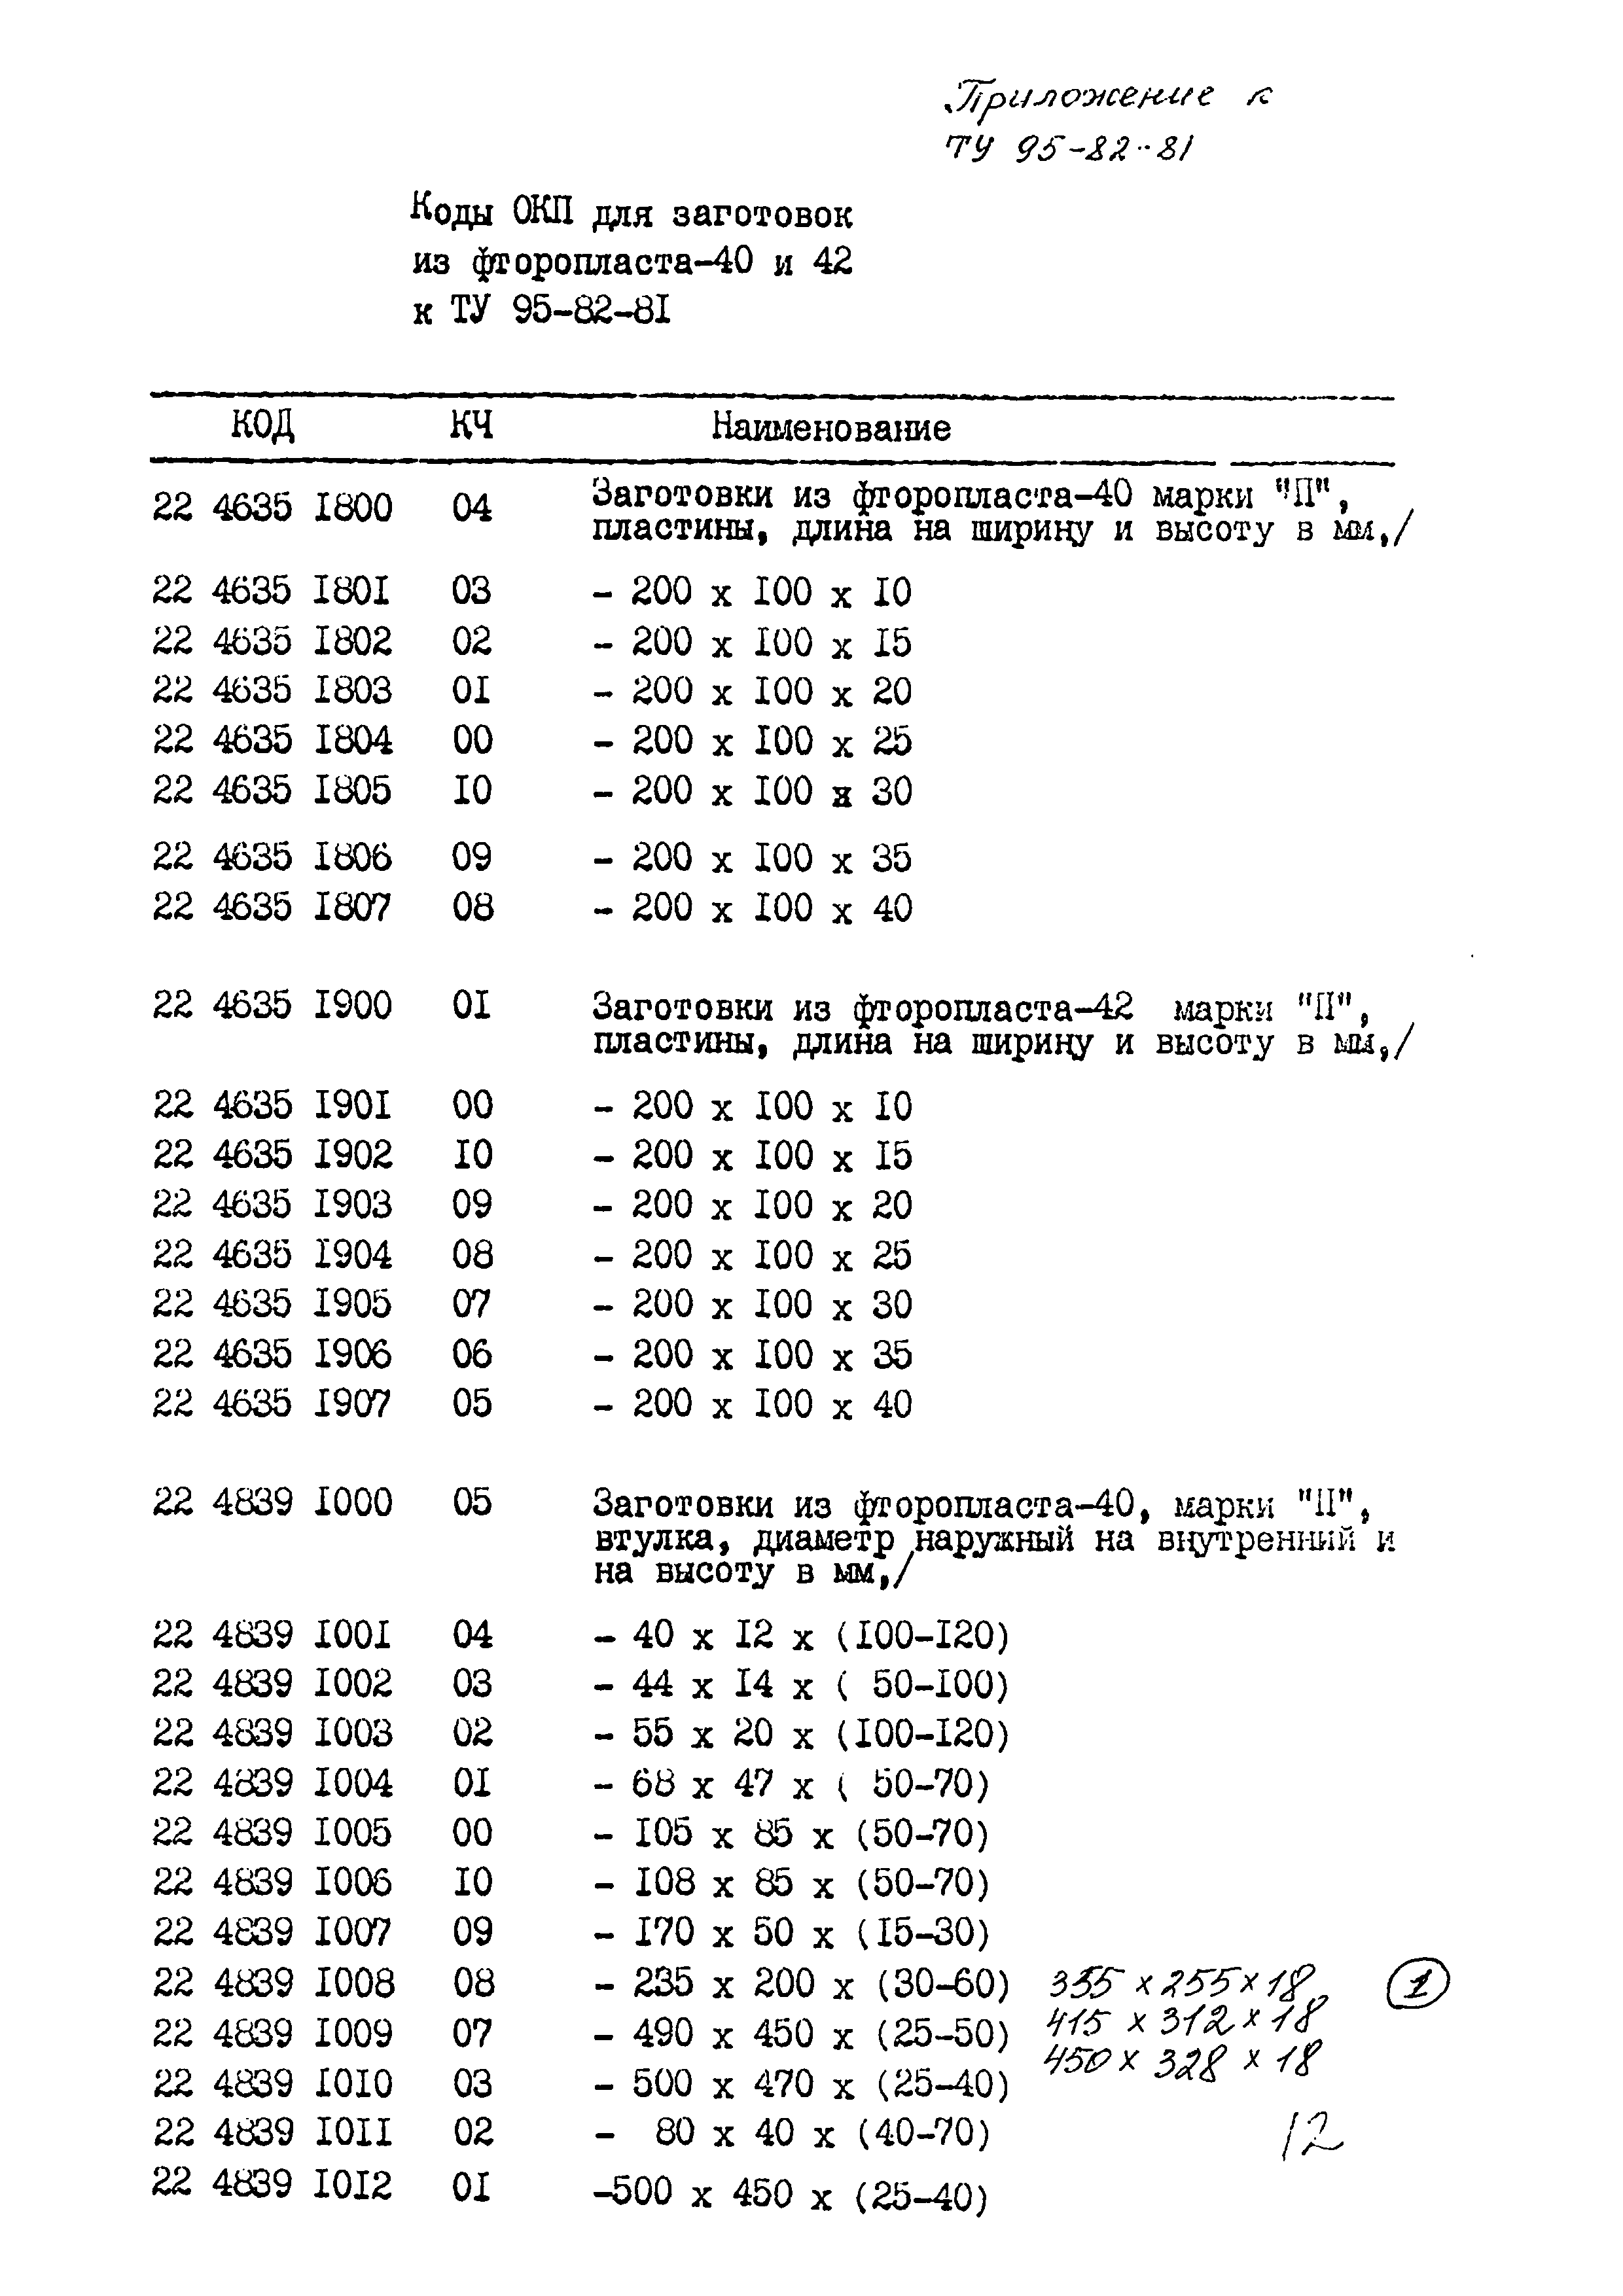 ТУ 95-82-81ЛУ